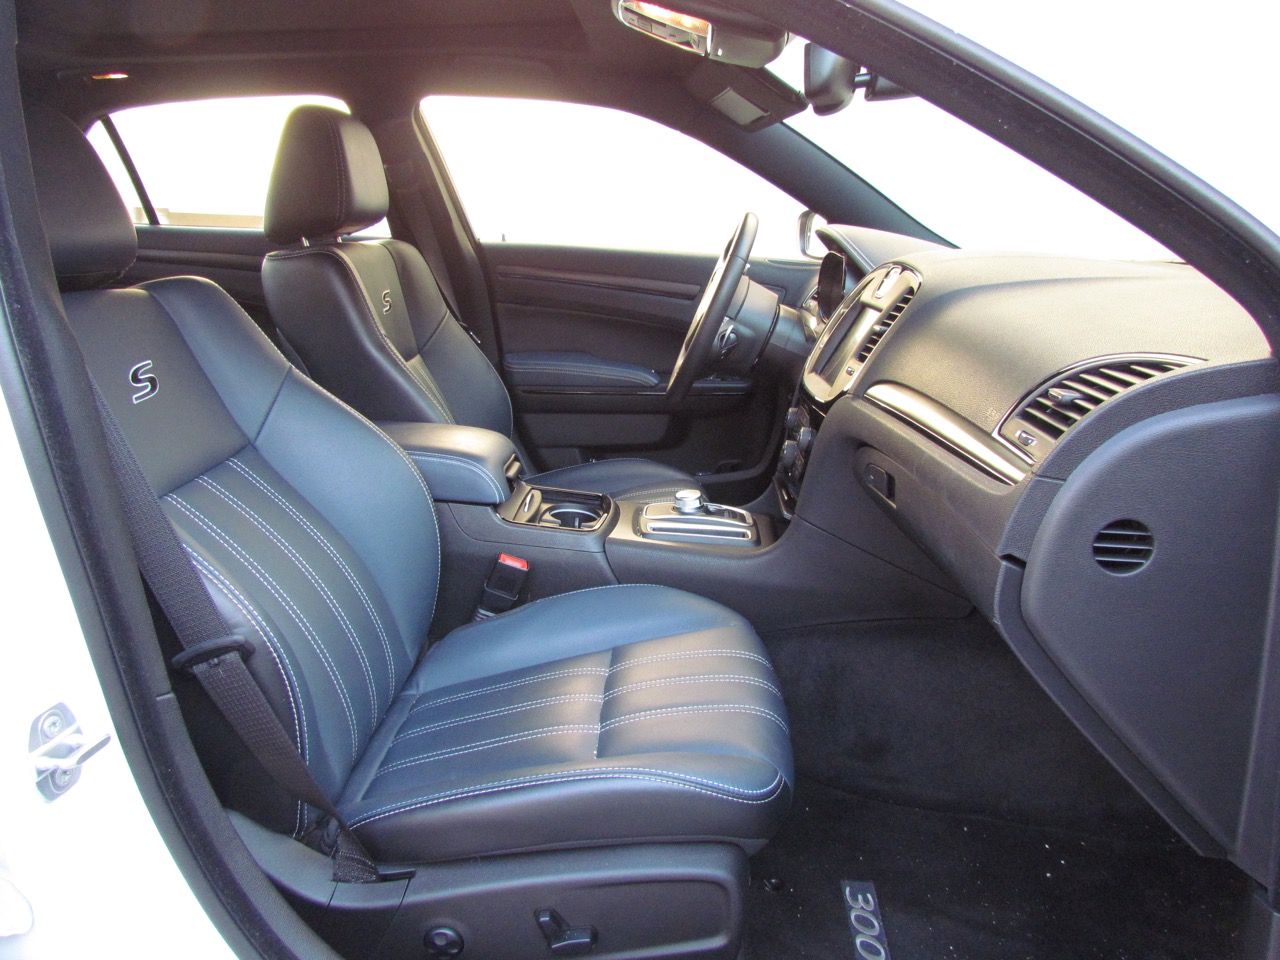 , Driven: 2016 Chrysler 300S, ClassicCars.com Journal